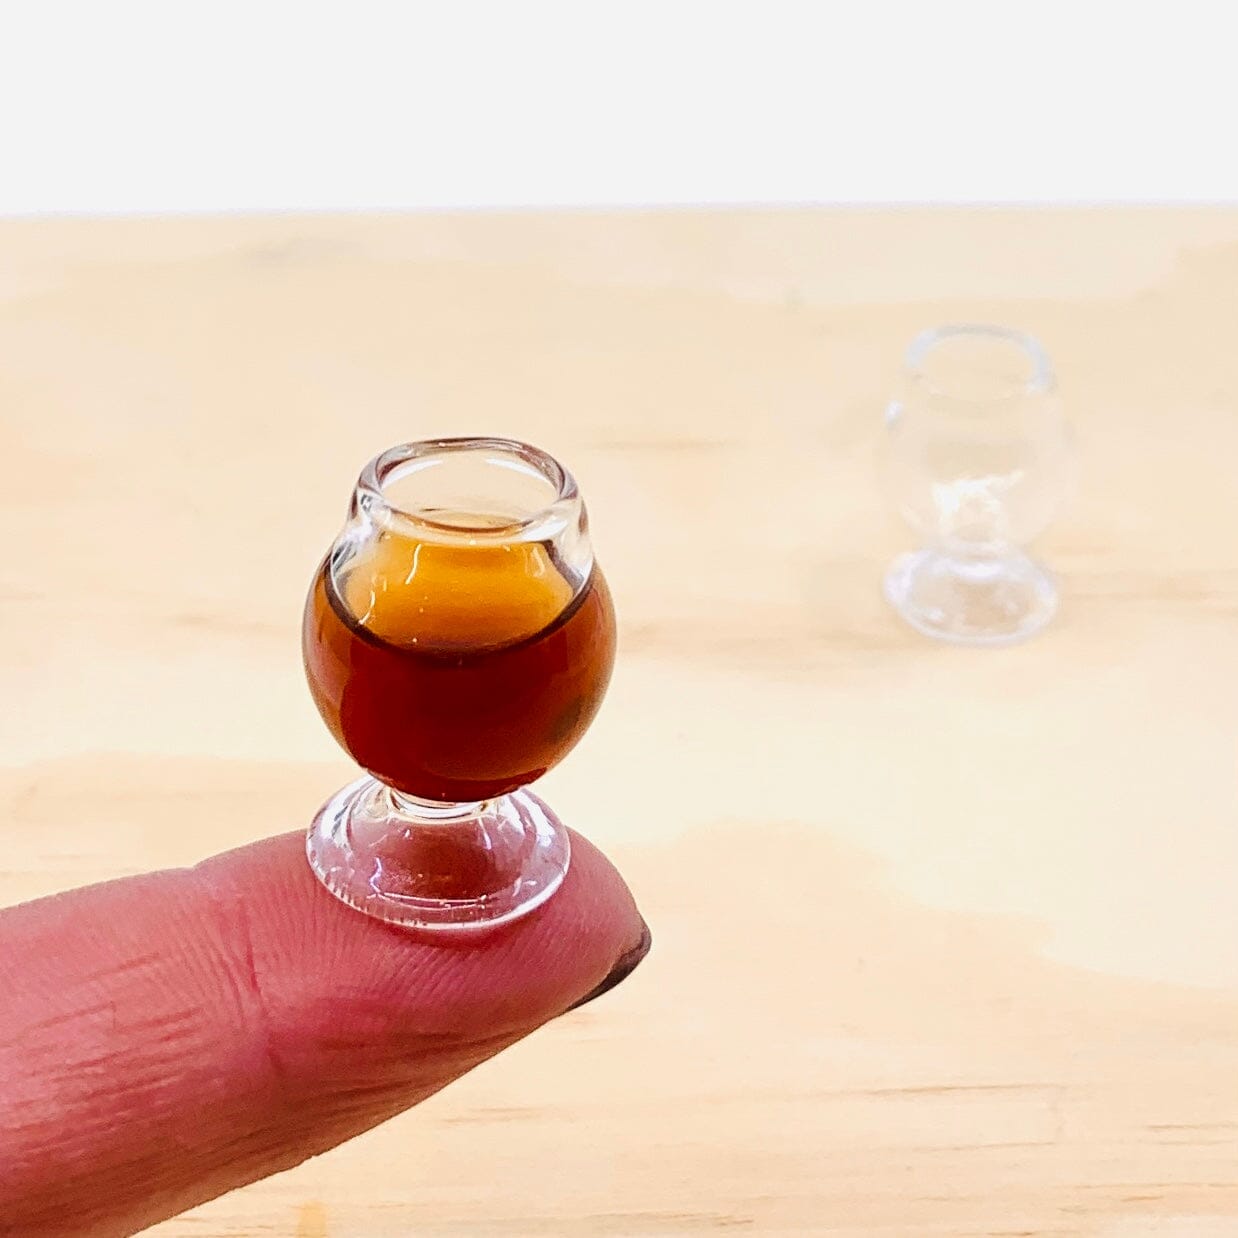 Tiny Glass Snifter Miniature - 